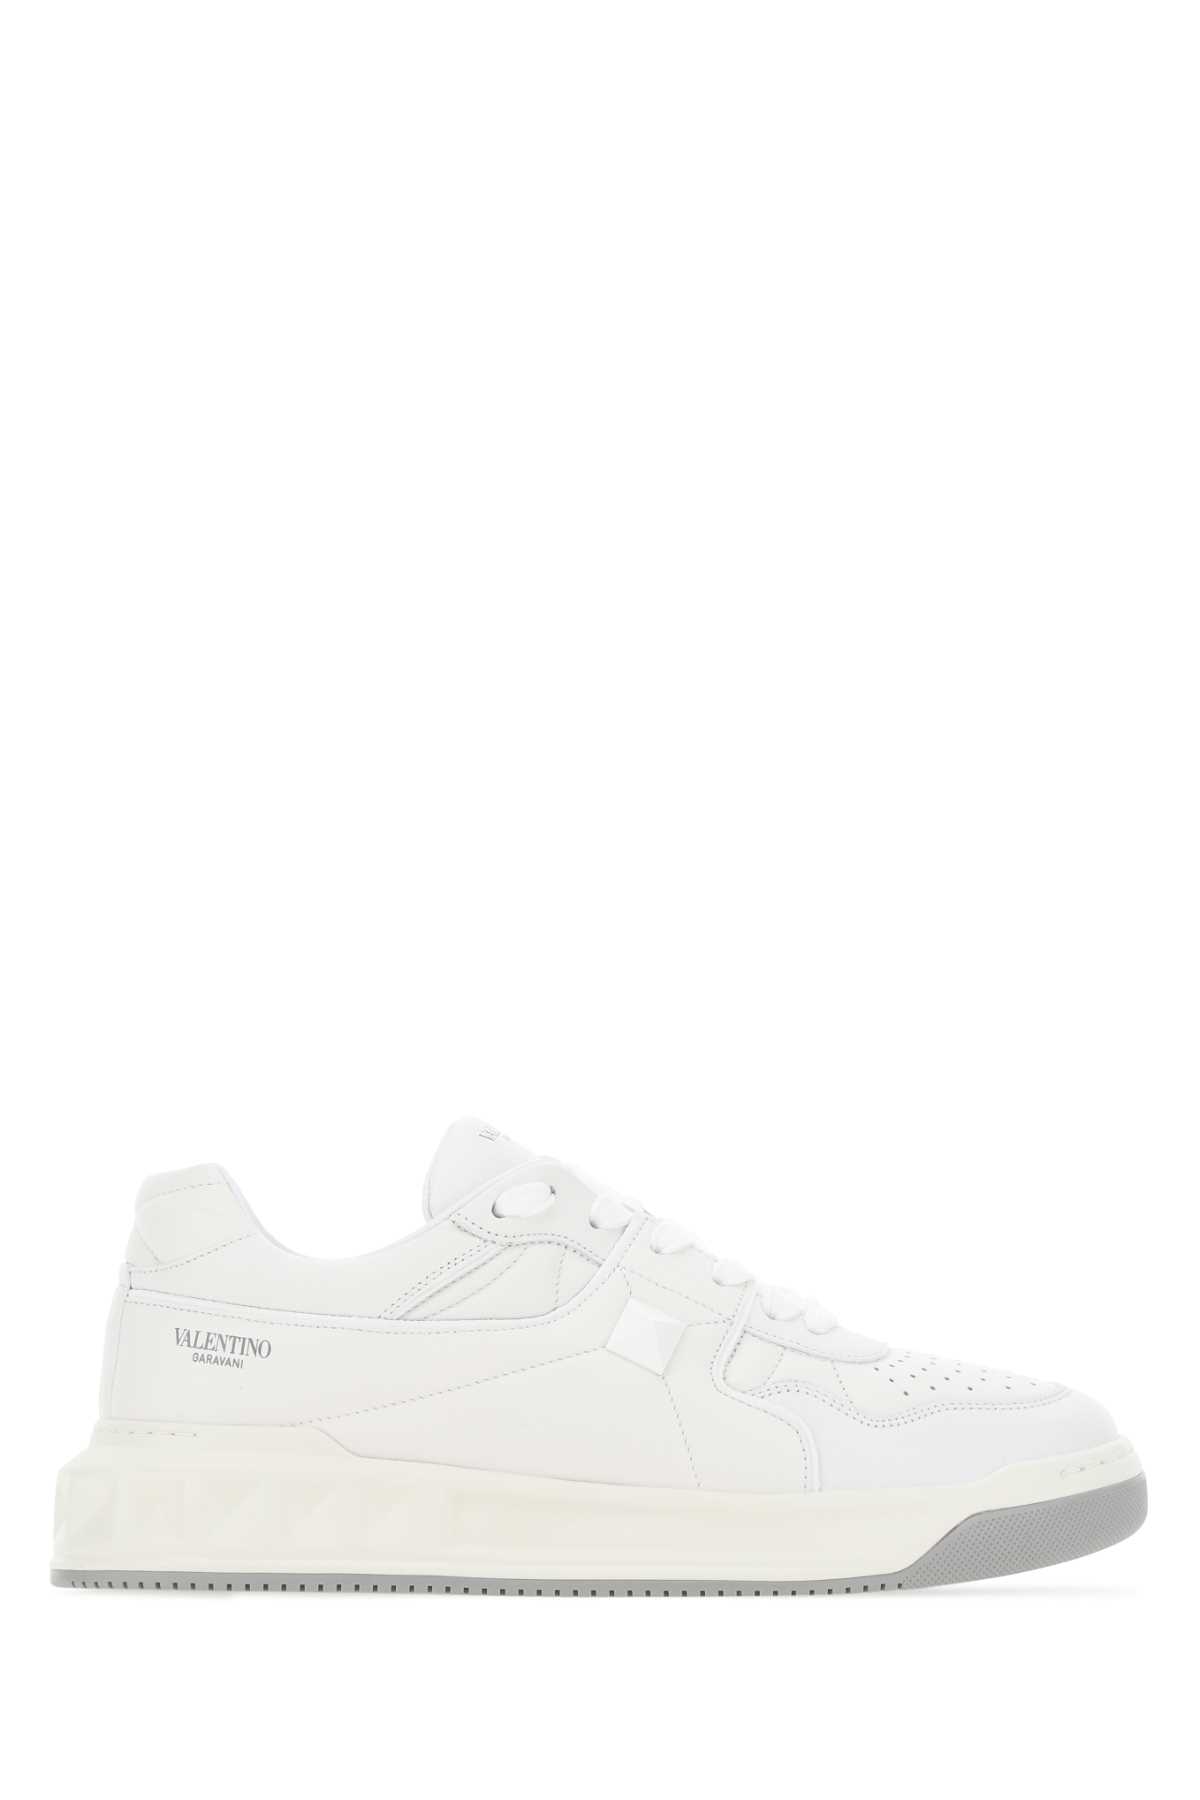 Valentino Garavani White Nappa Leather One Stud Sneakers